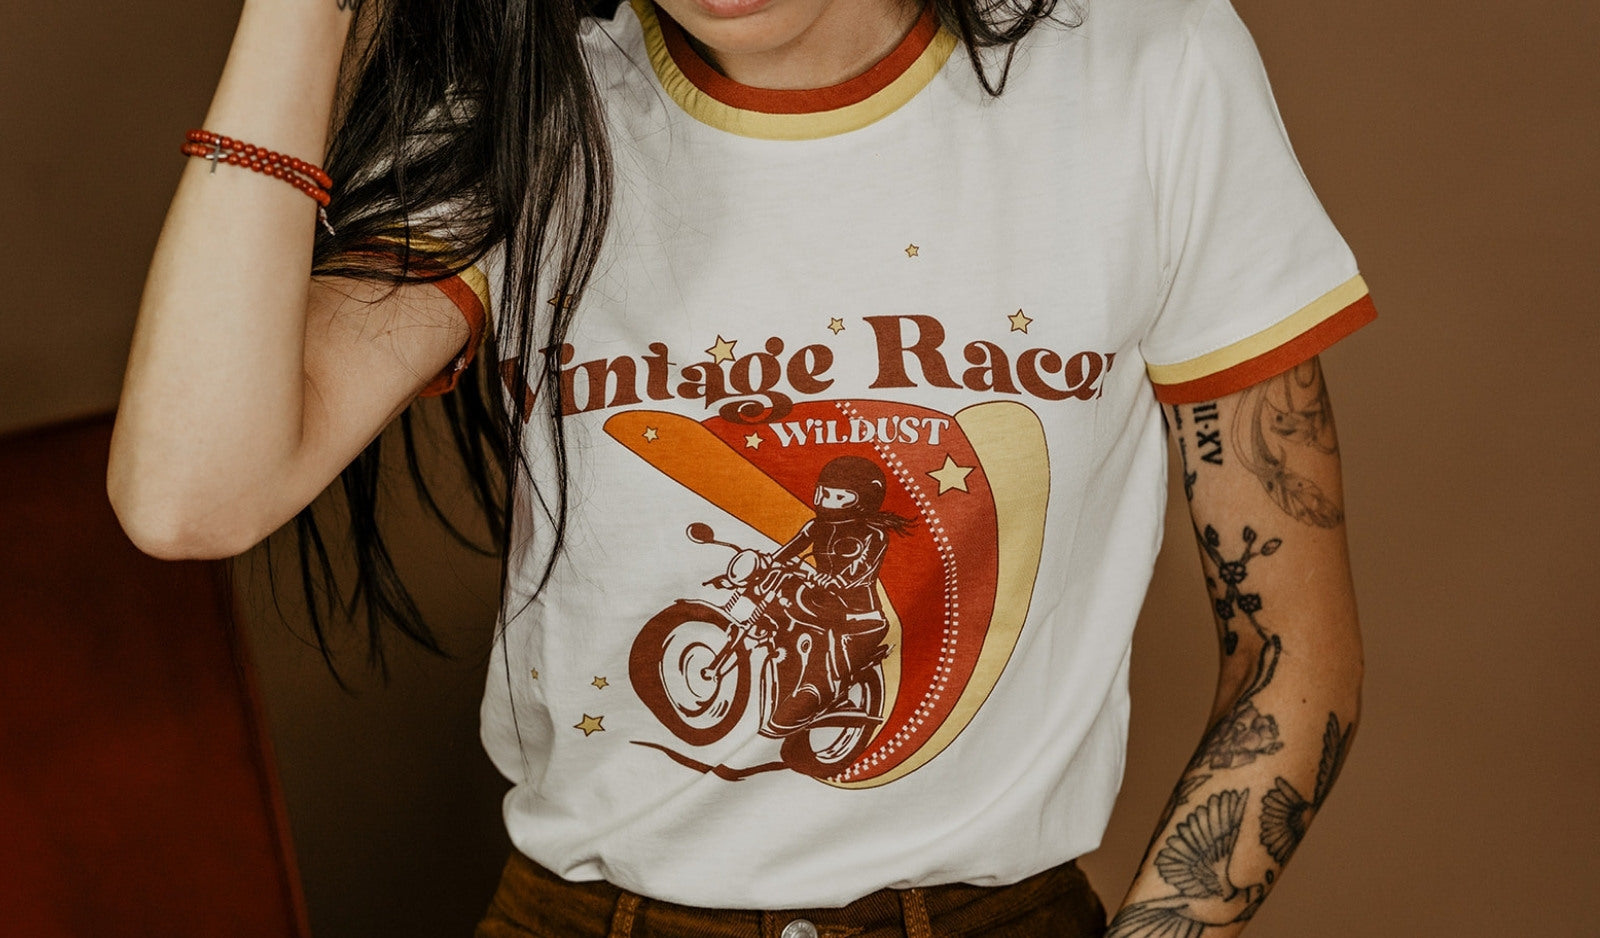 Wildust Sisters Vintage Racer T-Shirt